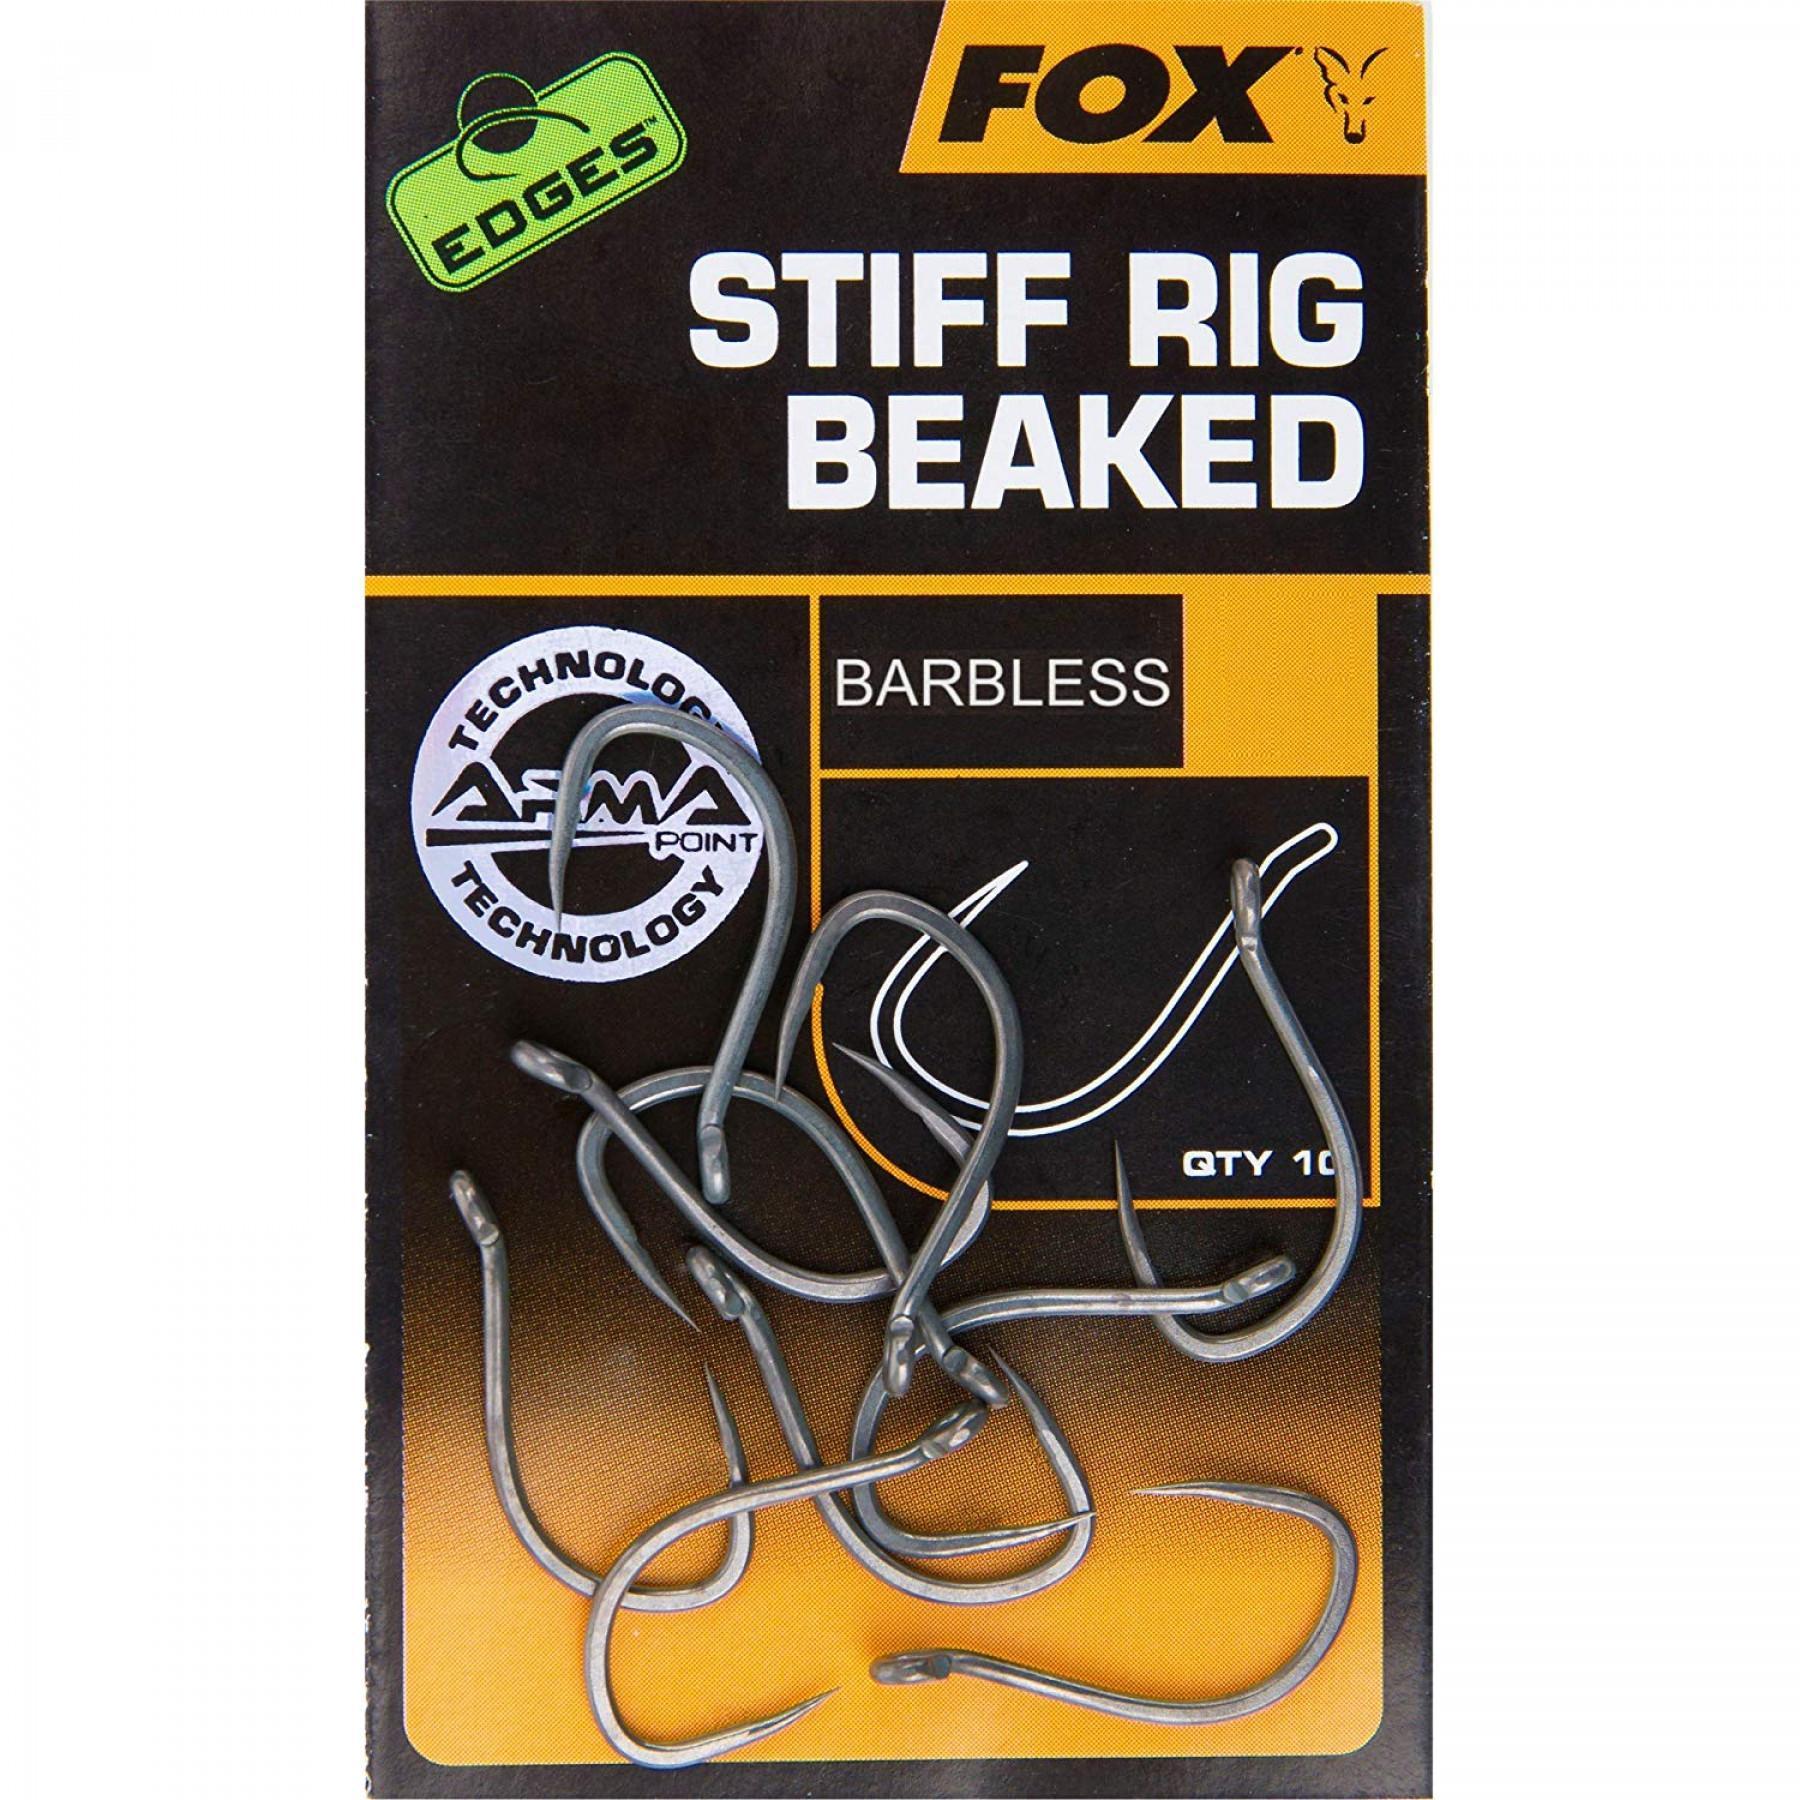 Gancho Fox Stiff Rig Beaked Edges taille 6B Barbless